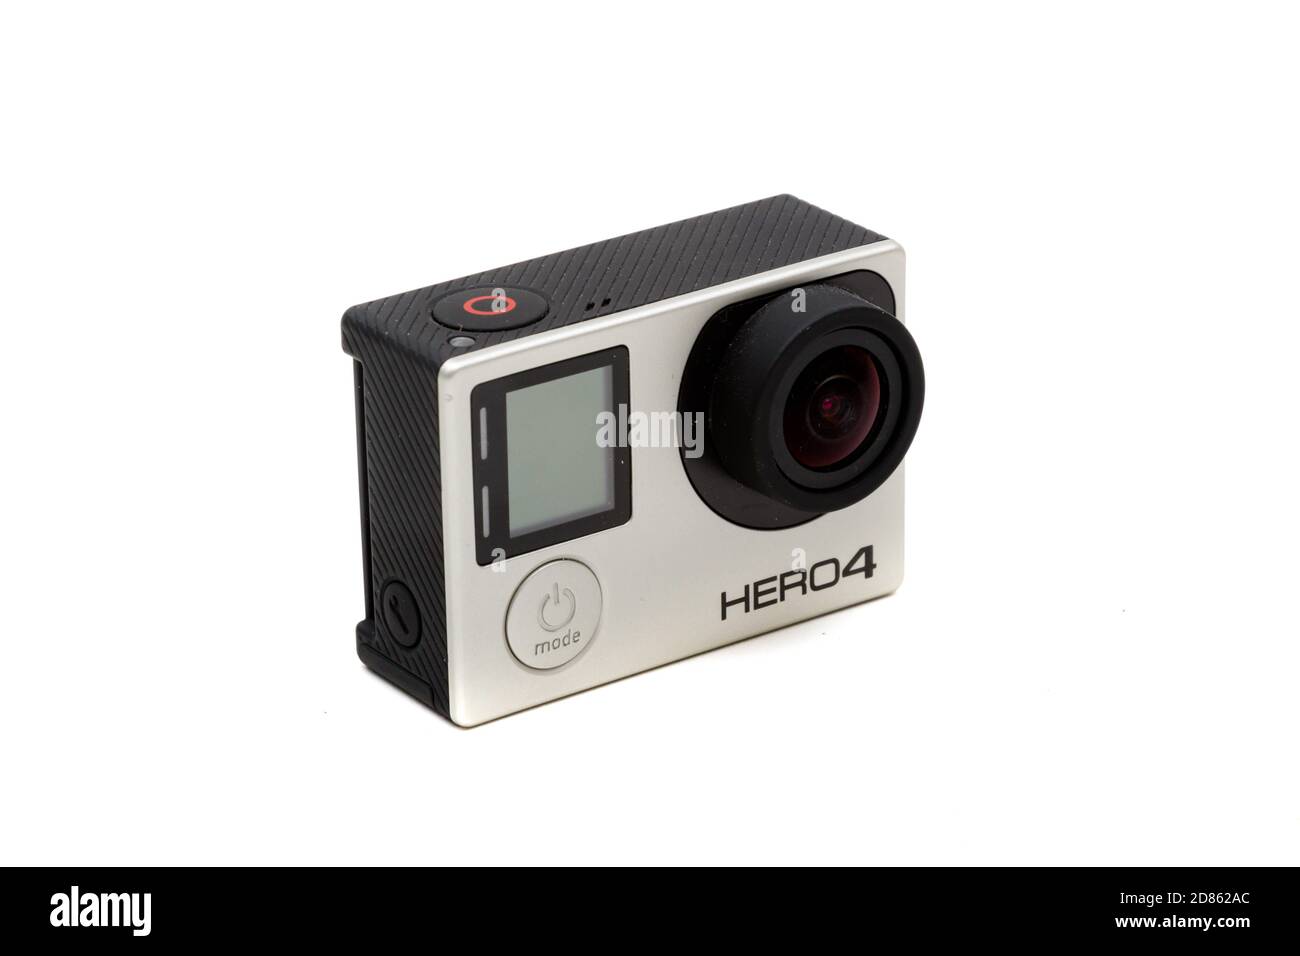 London, United Kingdom, 21st September 2020:- A GoPro Hero4 camera isolated on a white background Stock Photo